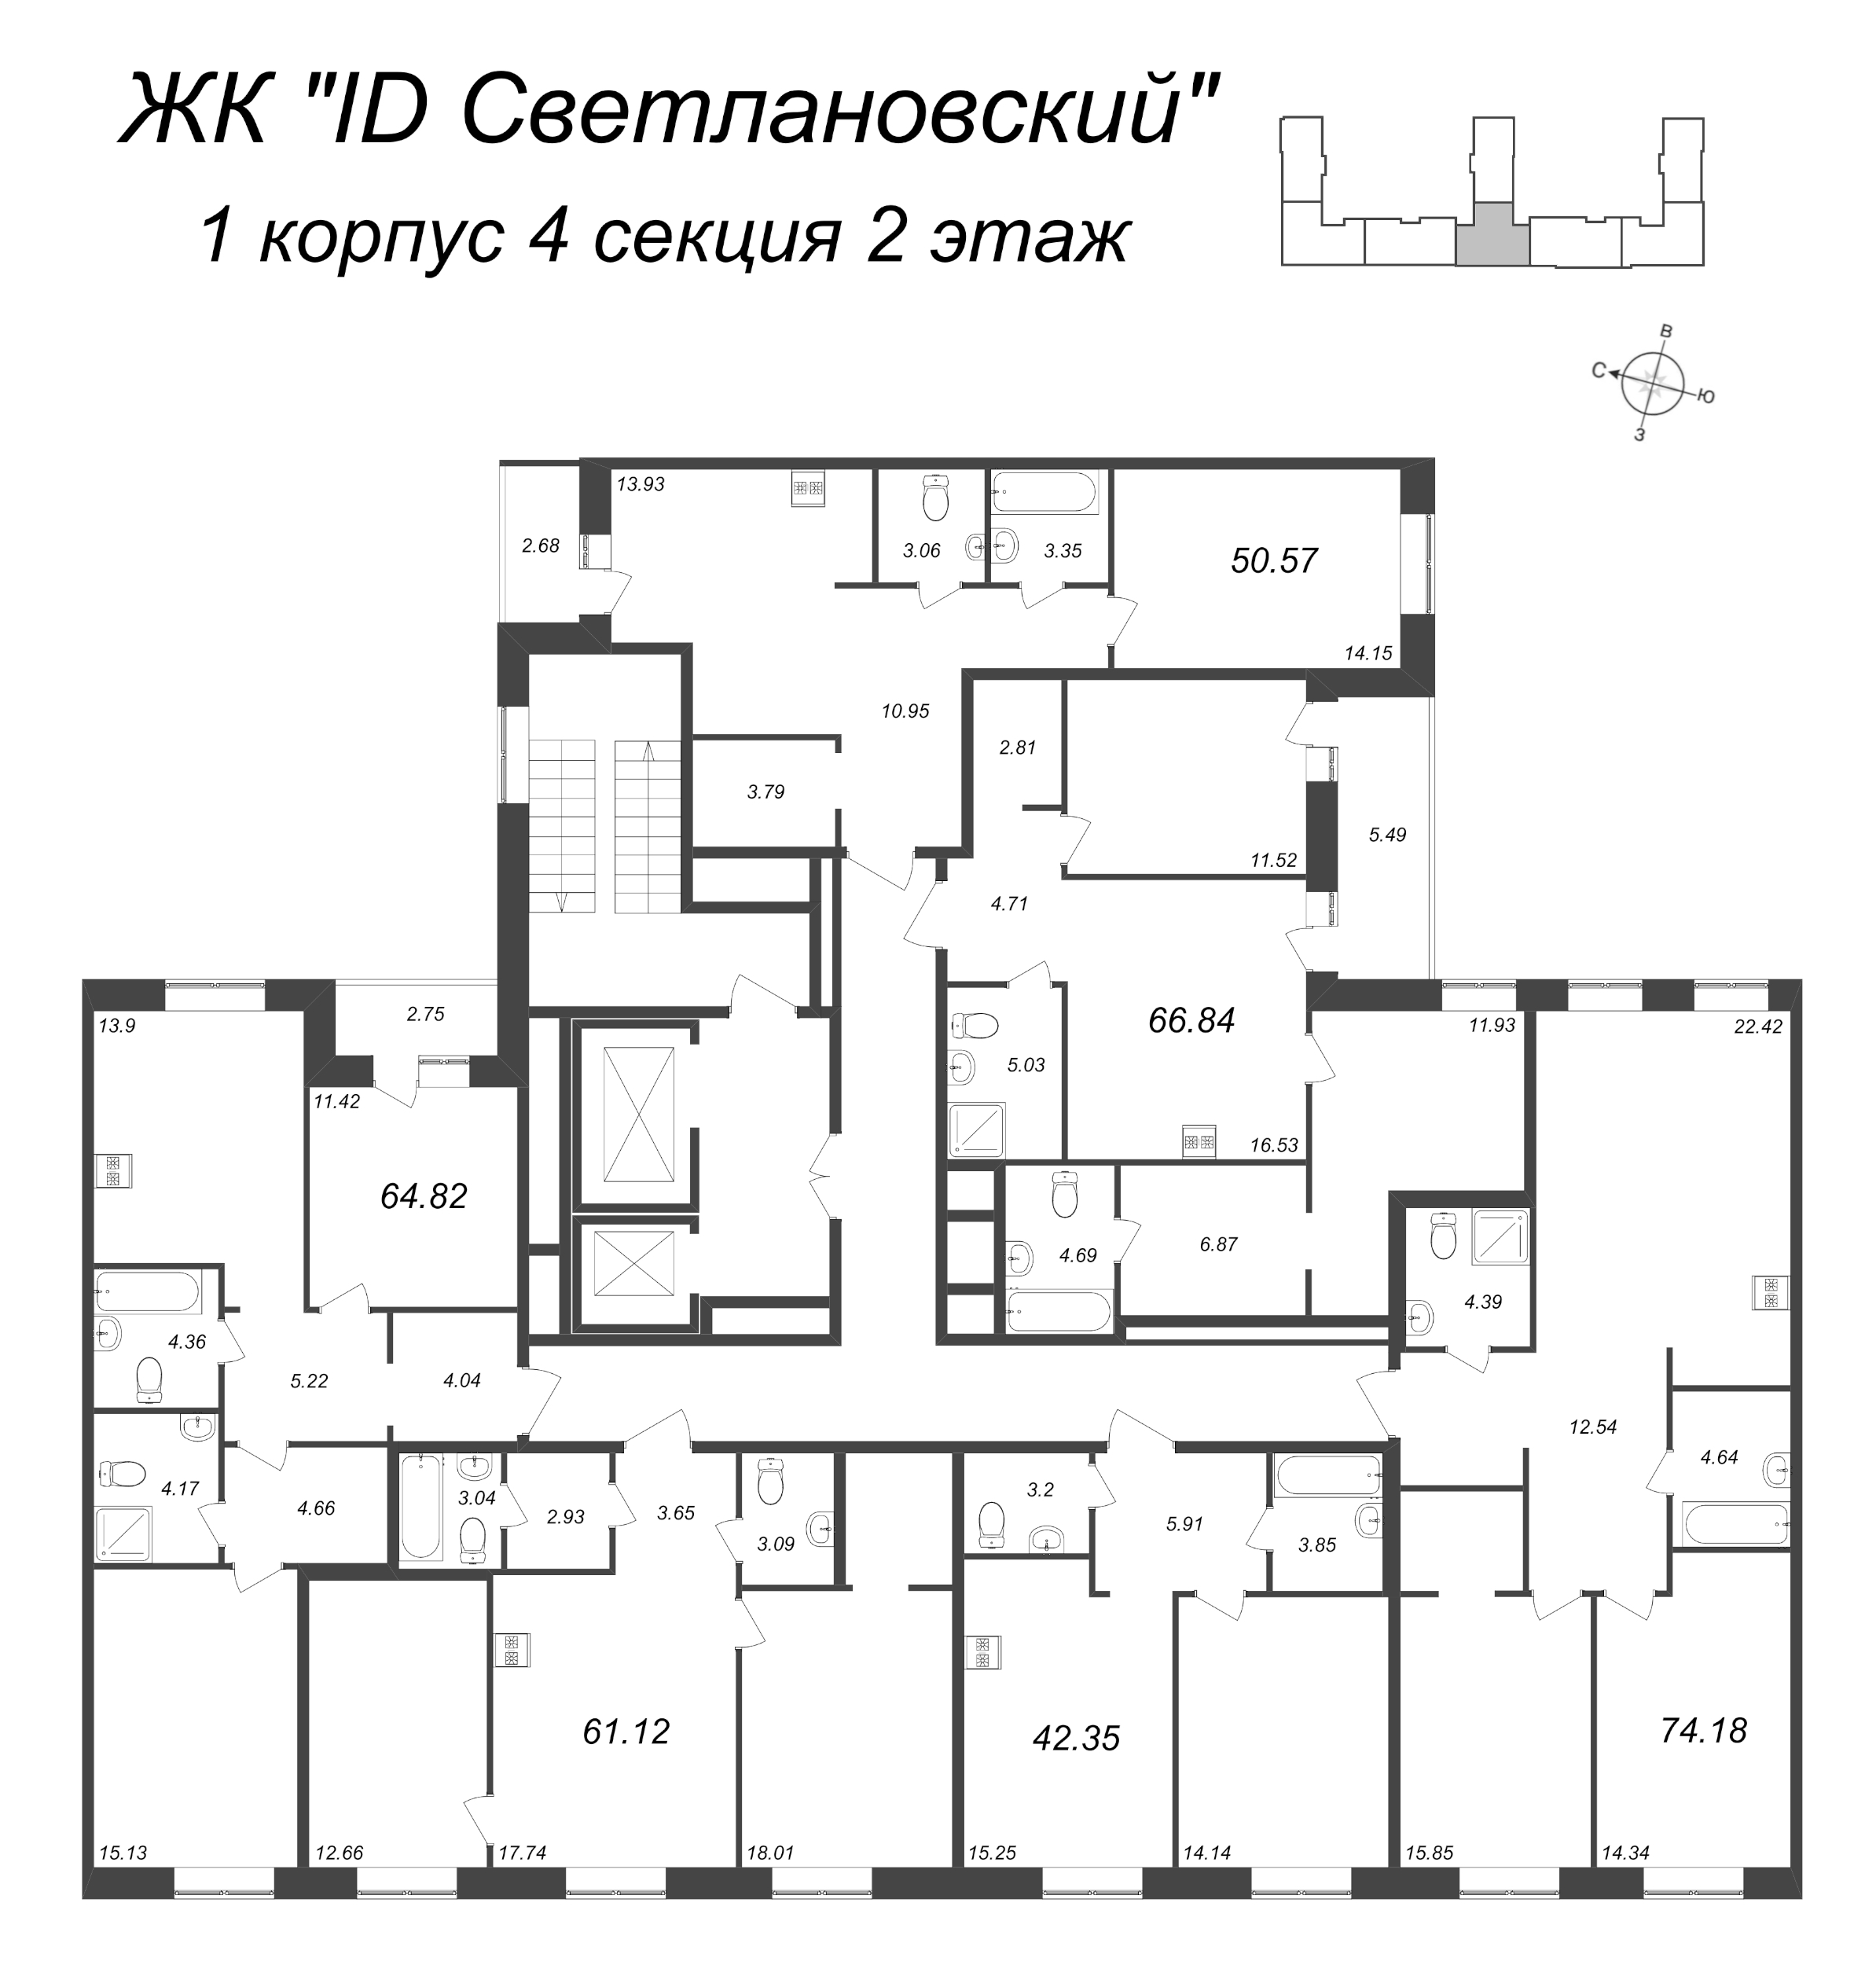 3-комнатная (Евро) квартира, 61.12 м² - планировка этажа